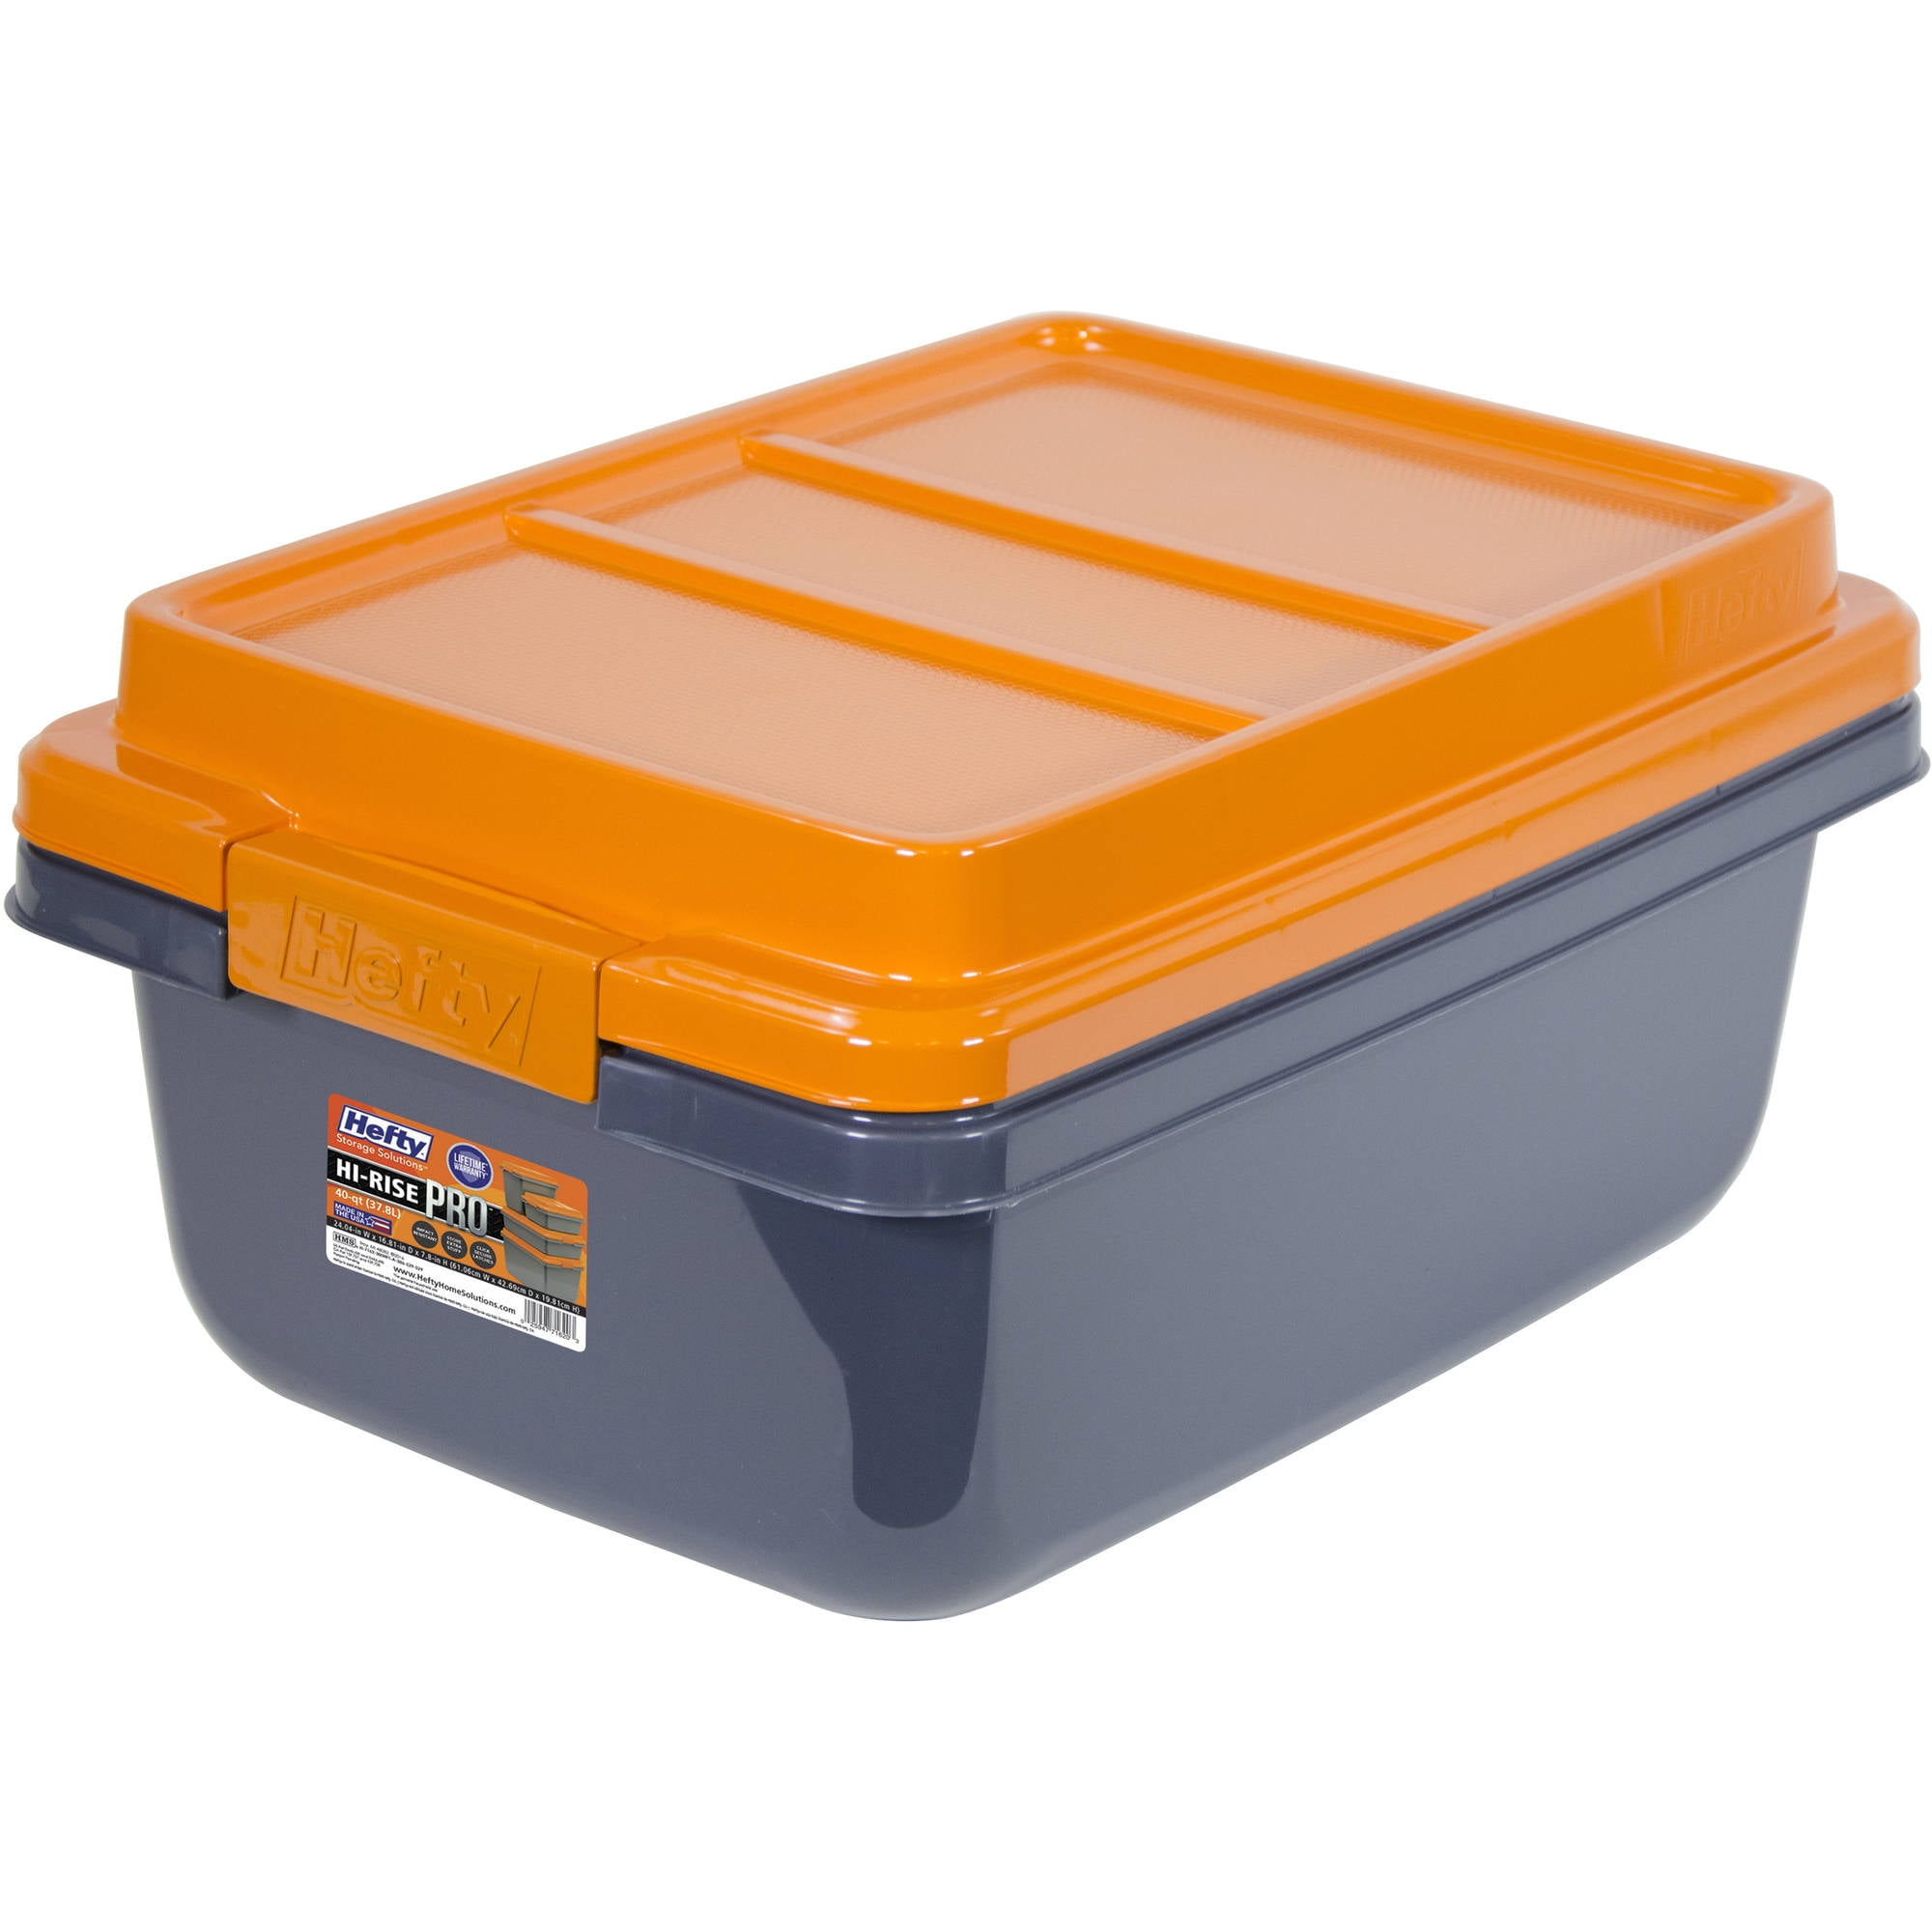 Hefty HI-RISE Heavy Duty 18 Qt. Latch Storage Bins, Orange/Gray